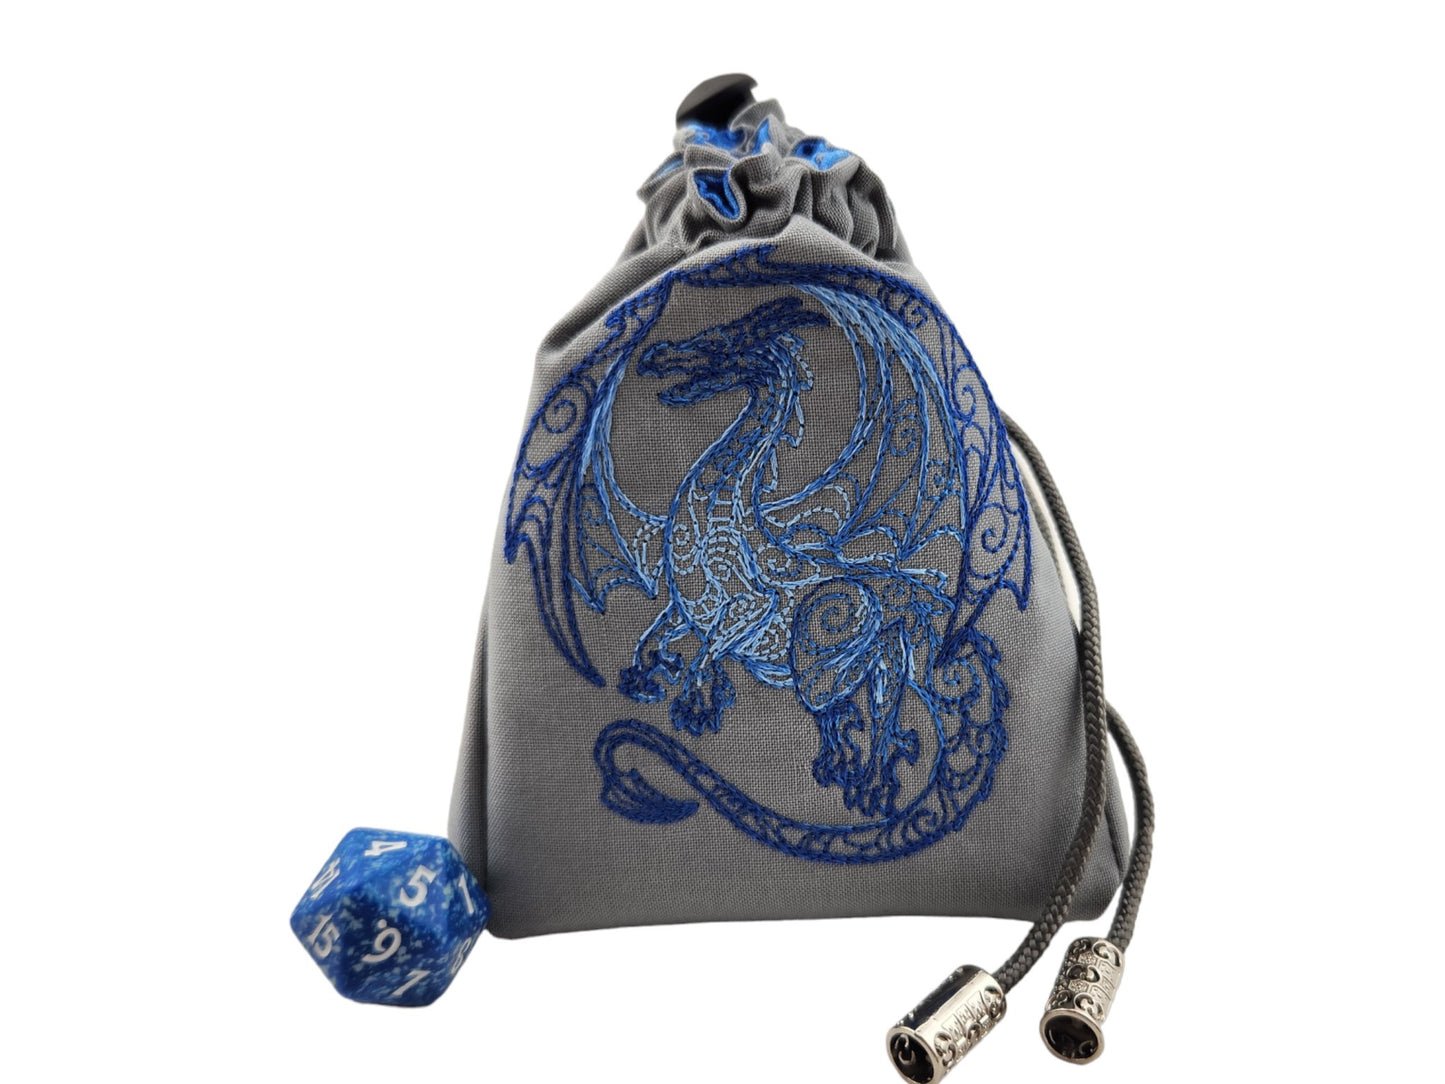 Blue Dragon Dice bag - Rowan Gate